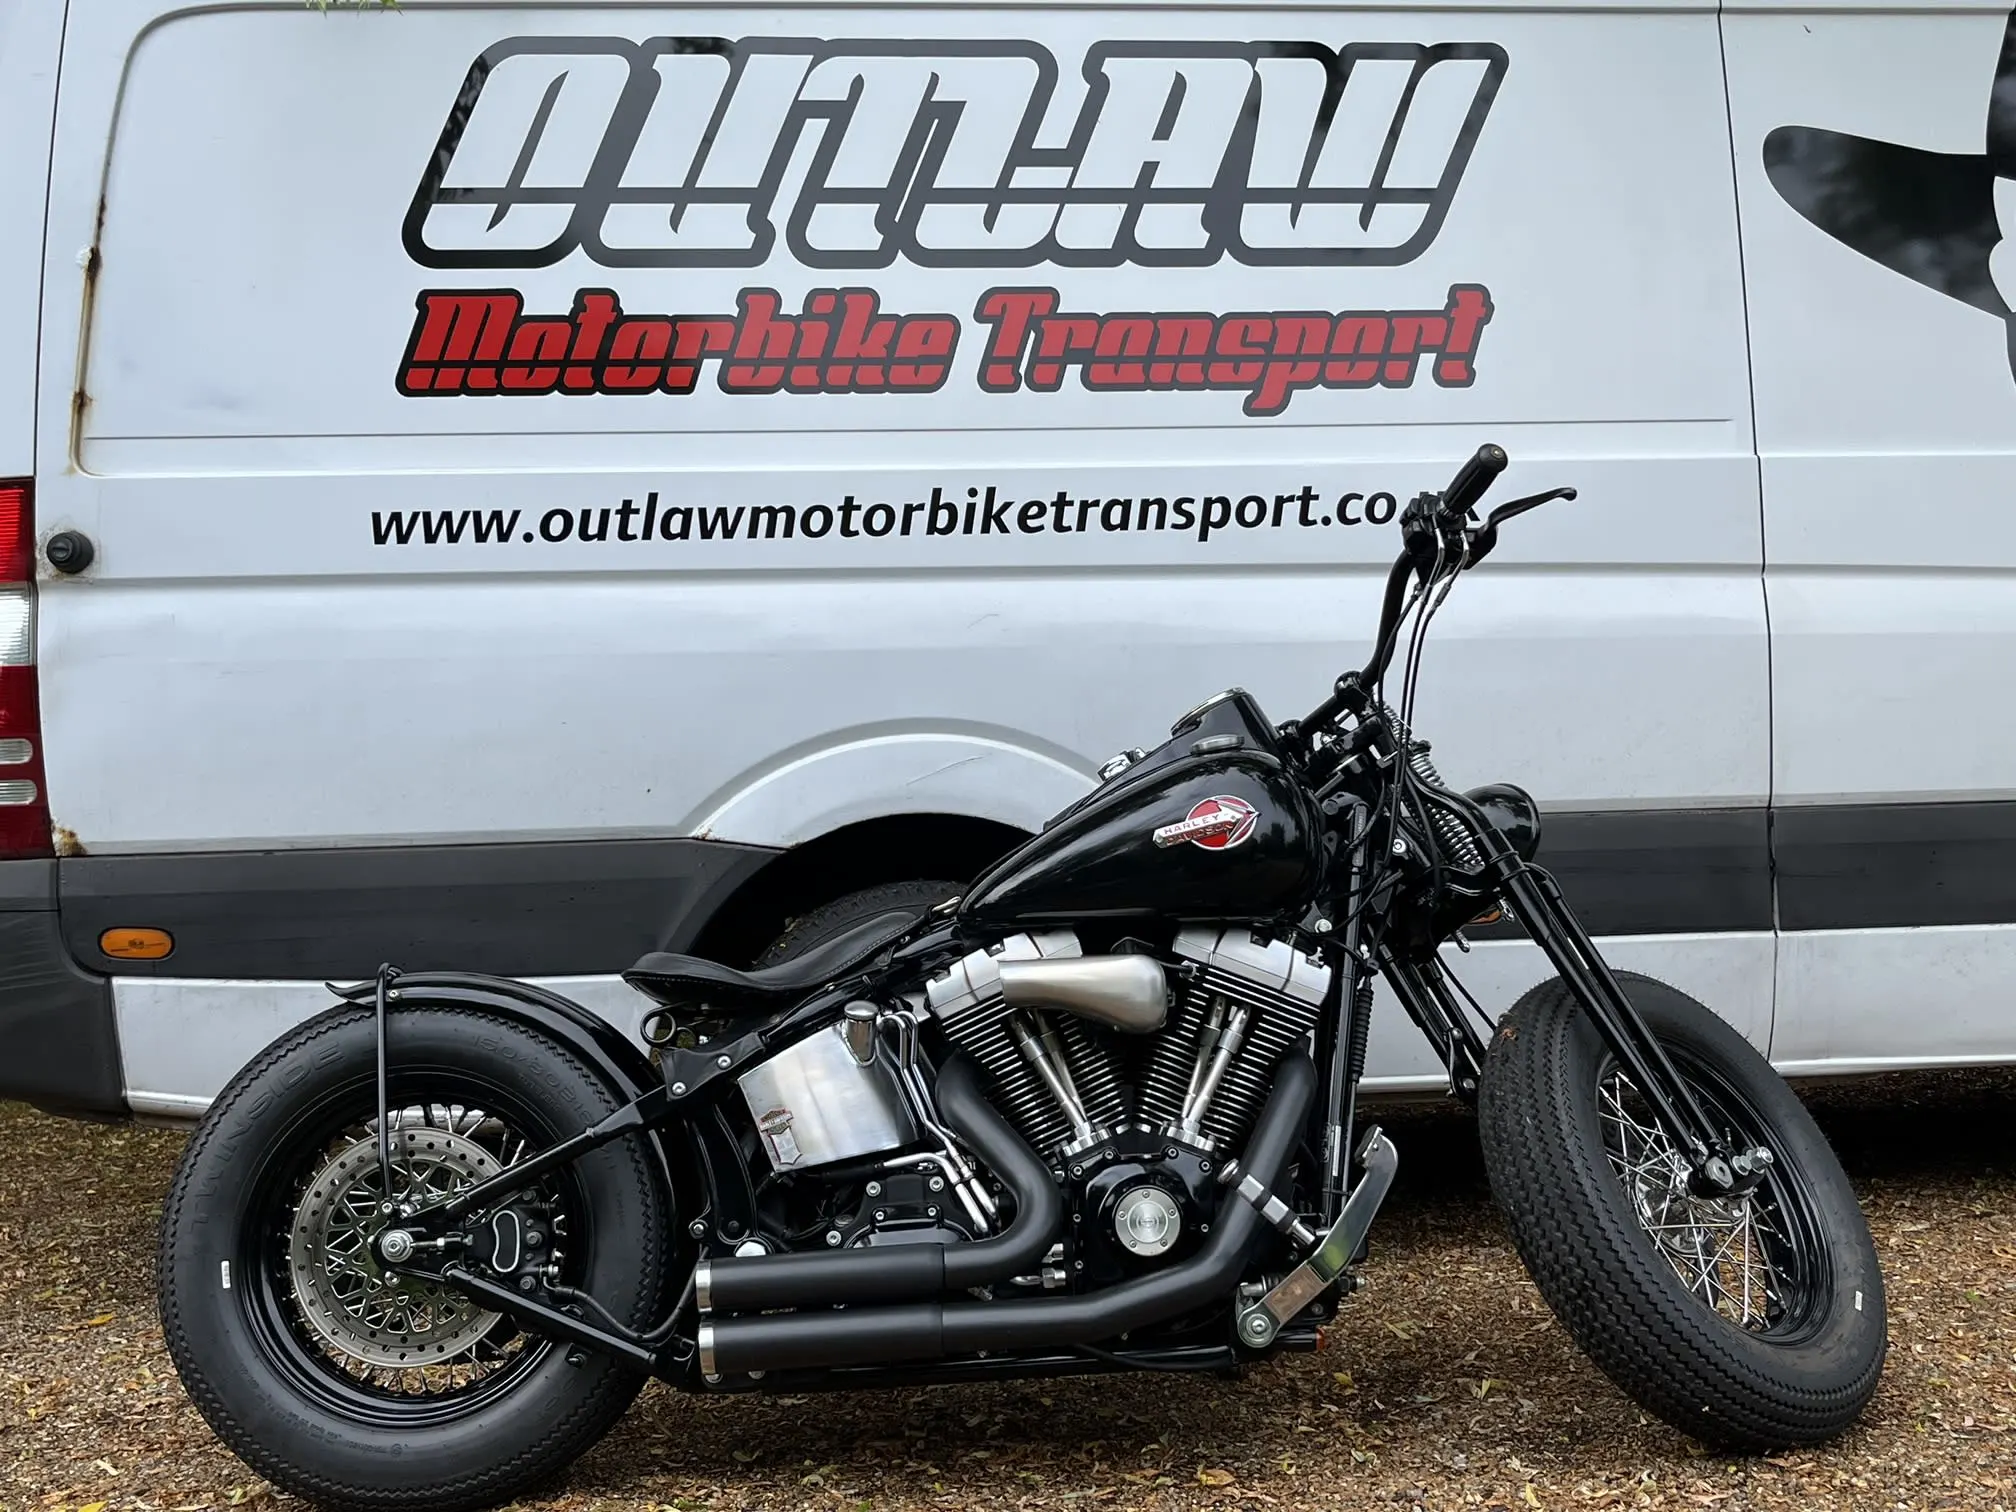 Outlaw Motorbike Transport Maidstone 07946 727325